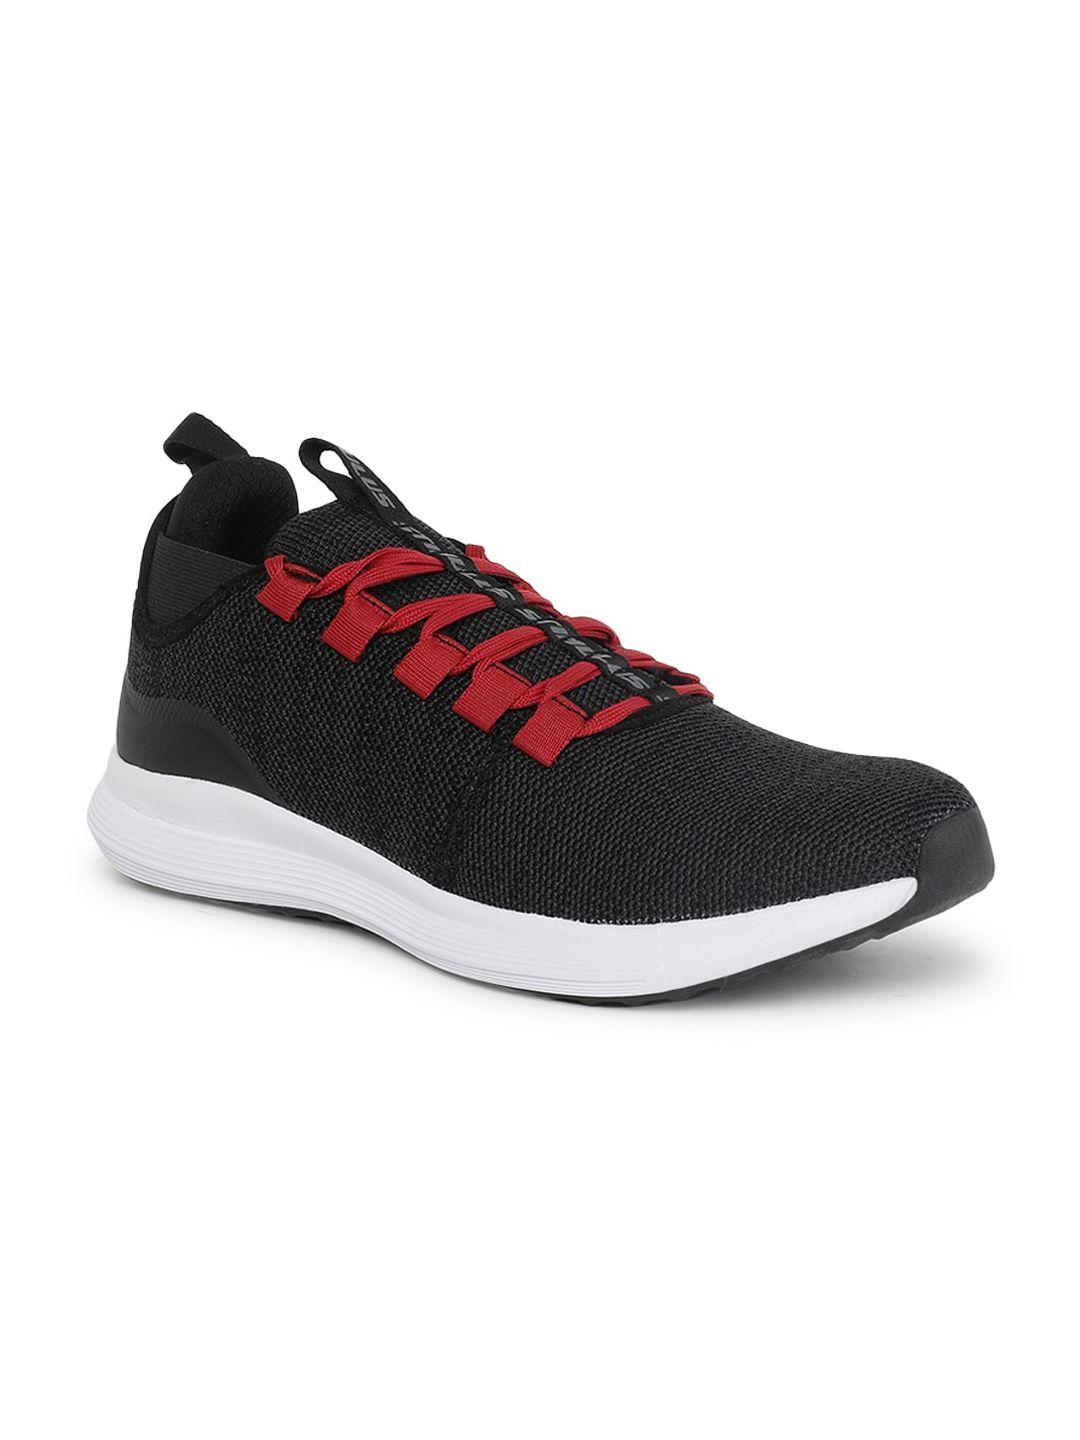 paragon men black & red woven design casual sneakers